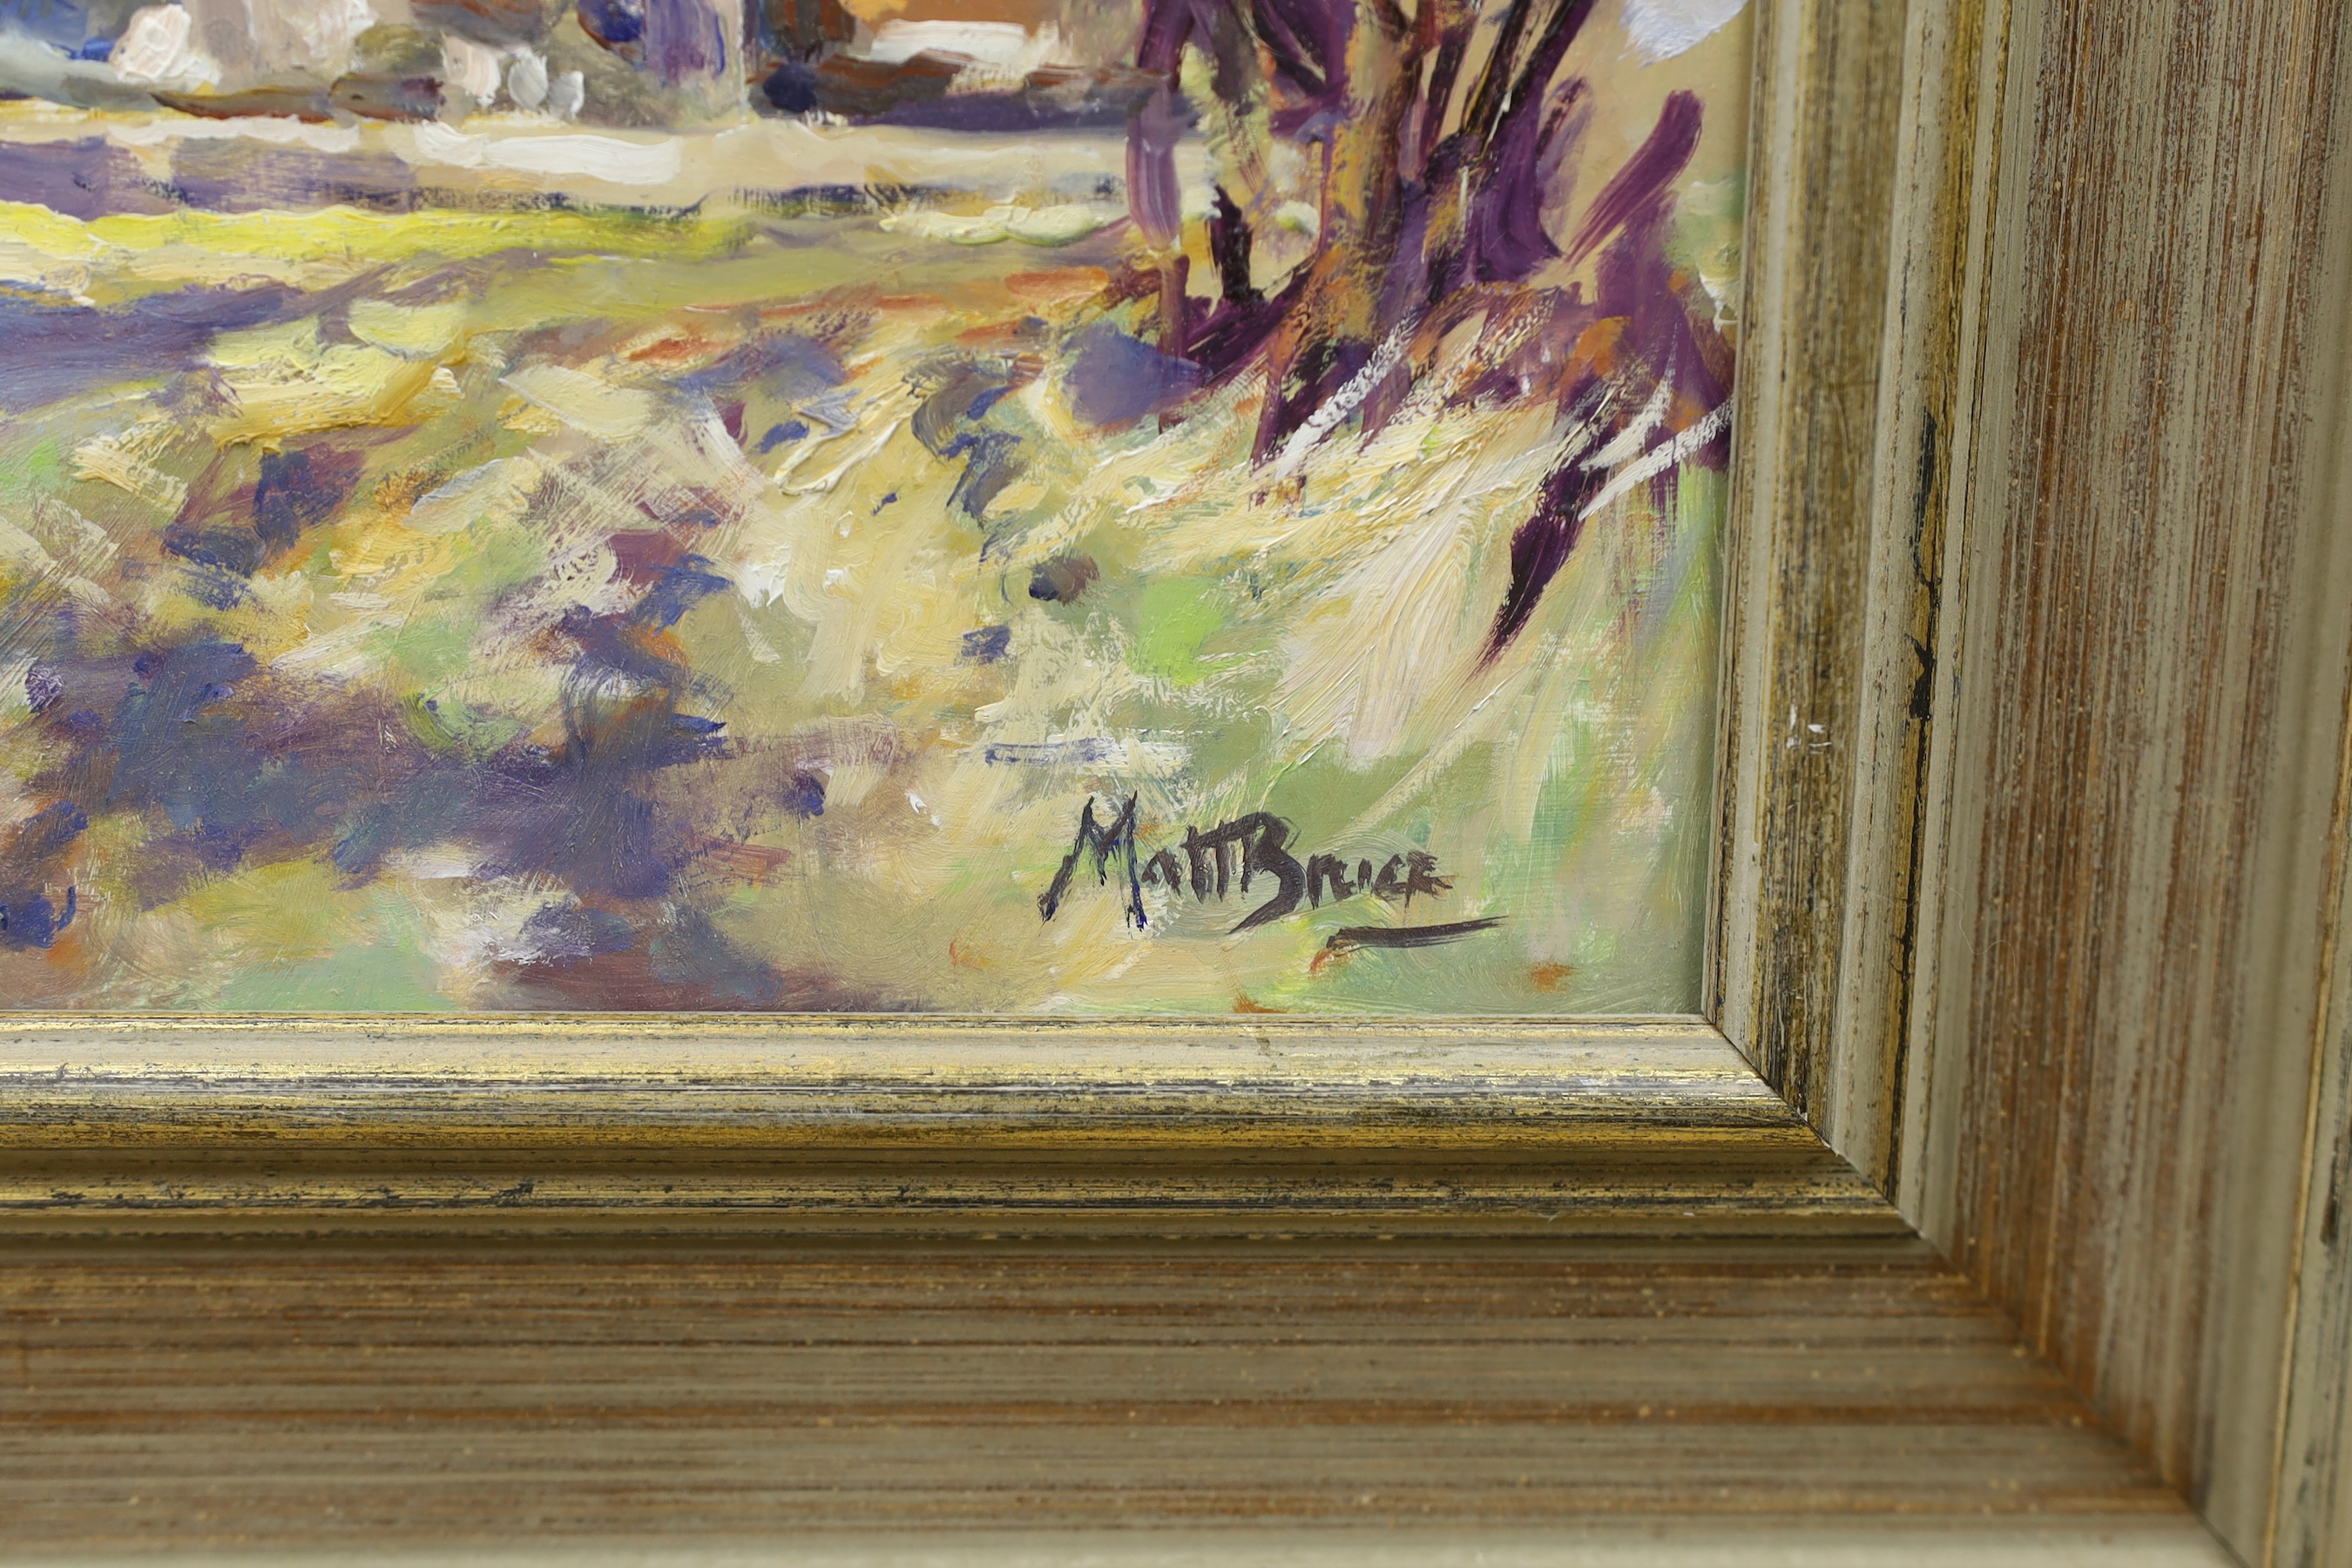 Matt Bruce (1915-2000), Impressionist oil on board, Farm landscape, signed, 24 x 29cm